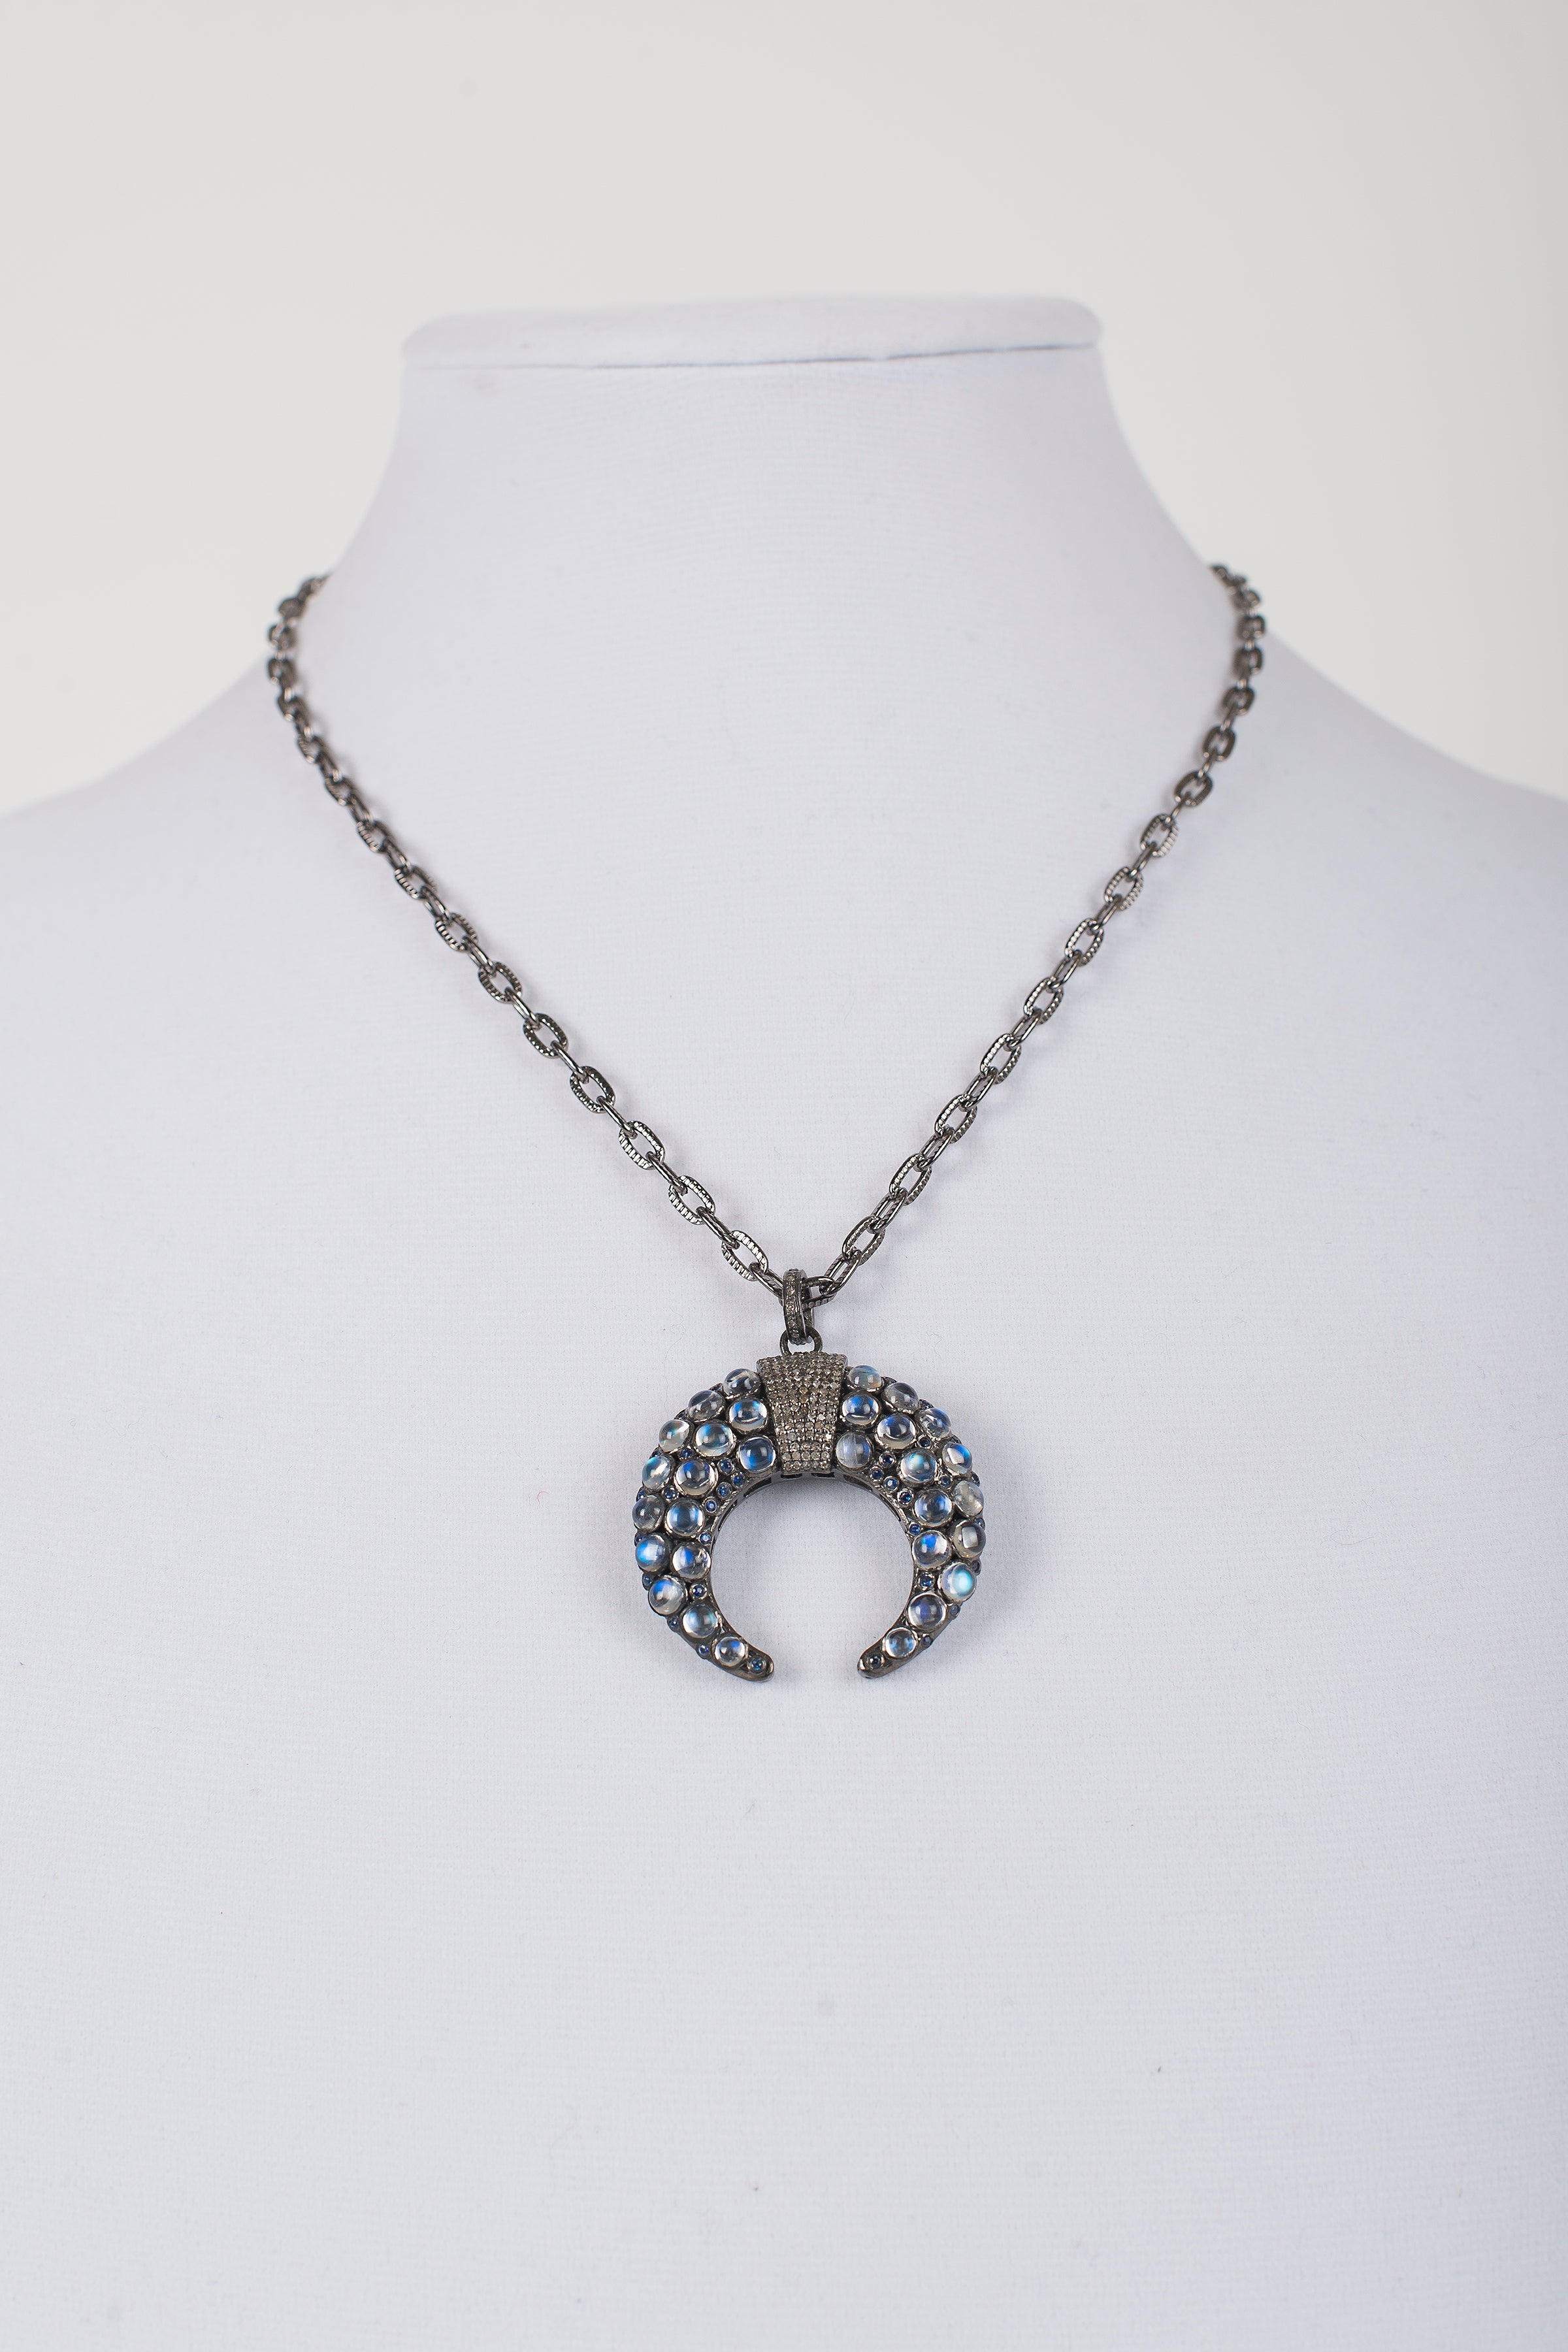 Pave Diamond and Moonstone  Pendant on  Gunmetal Chain